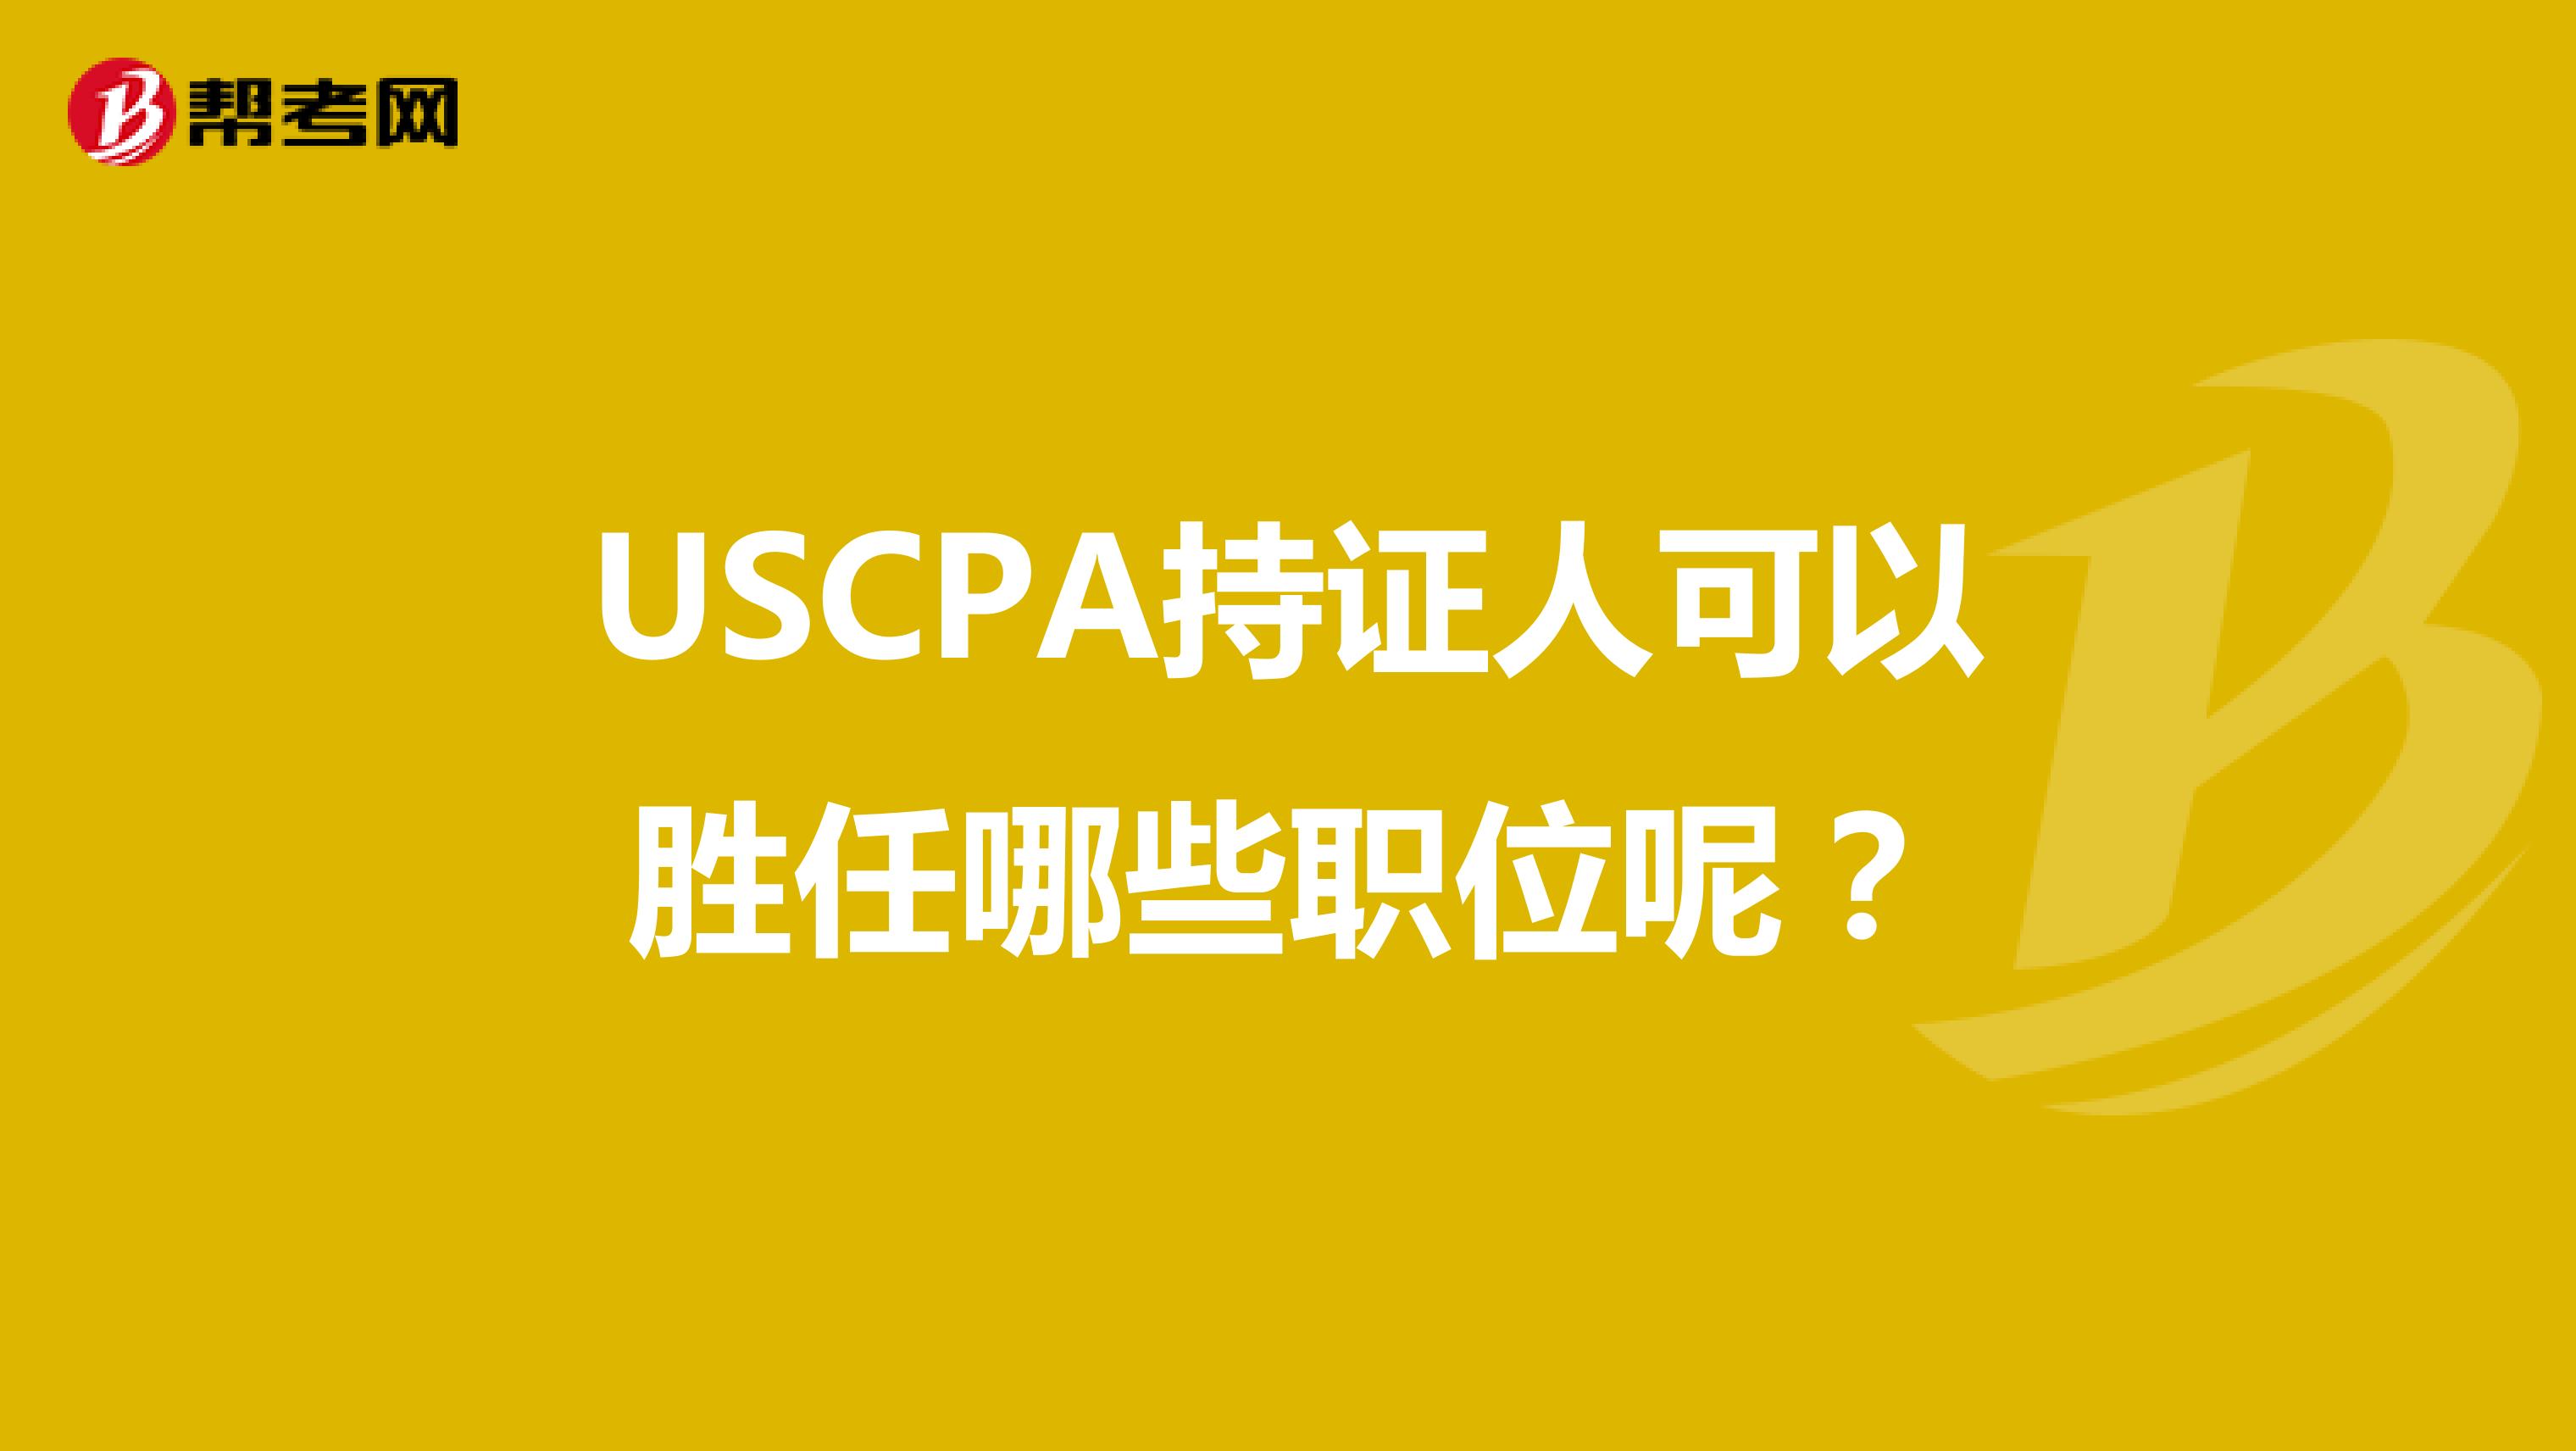 USCPA持证人可以胜任哪些职位呢？